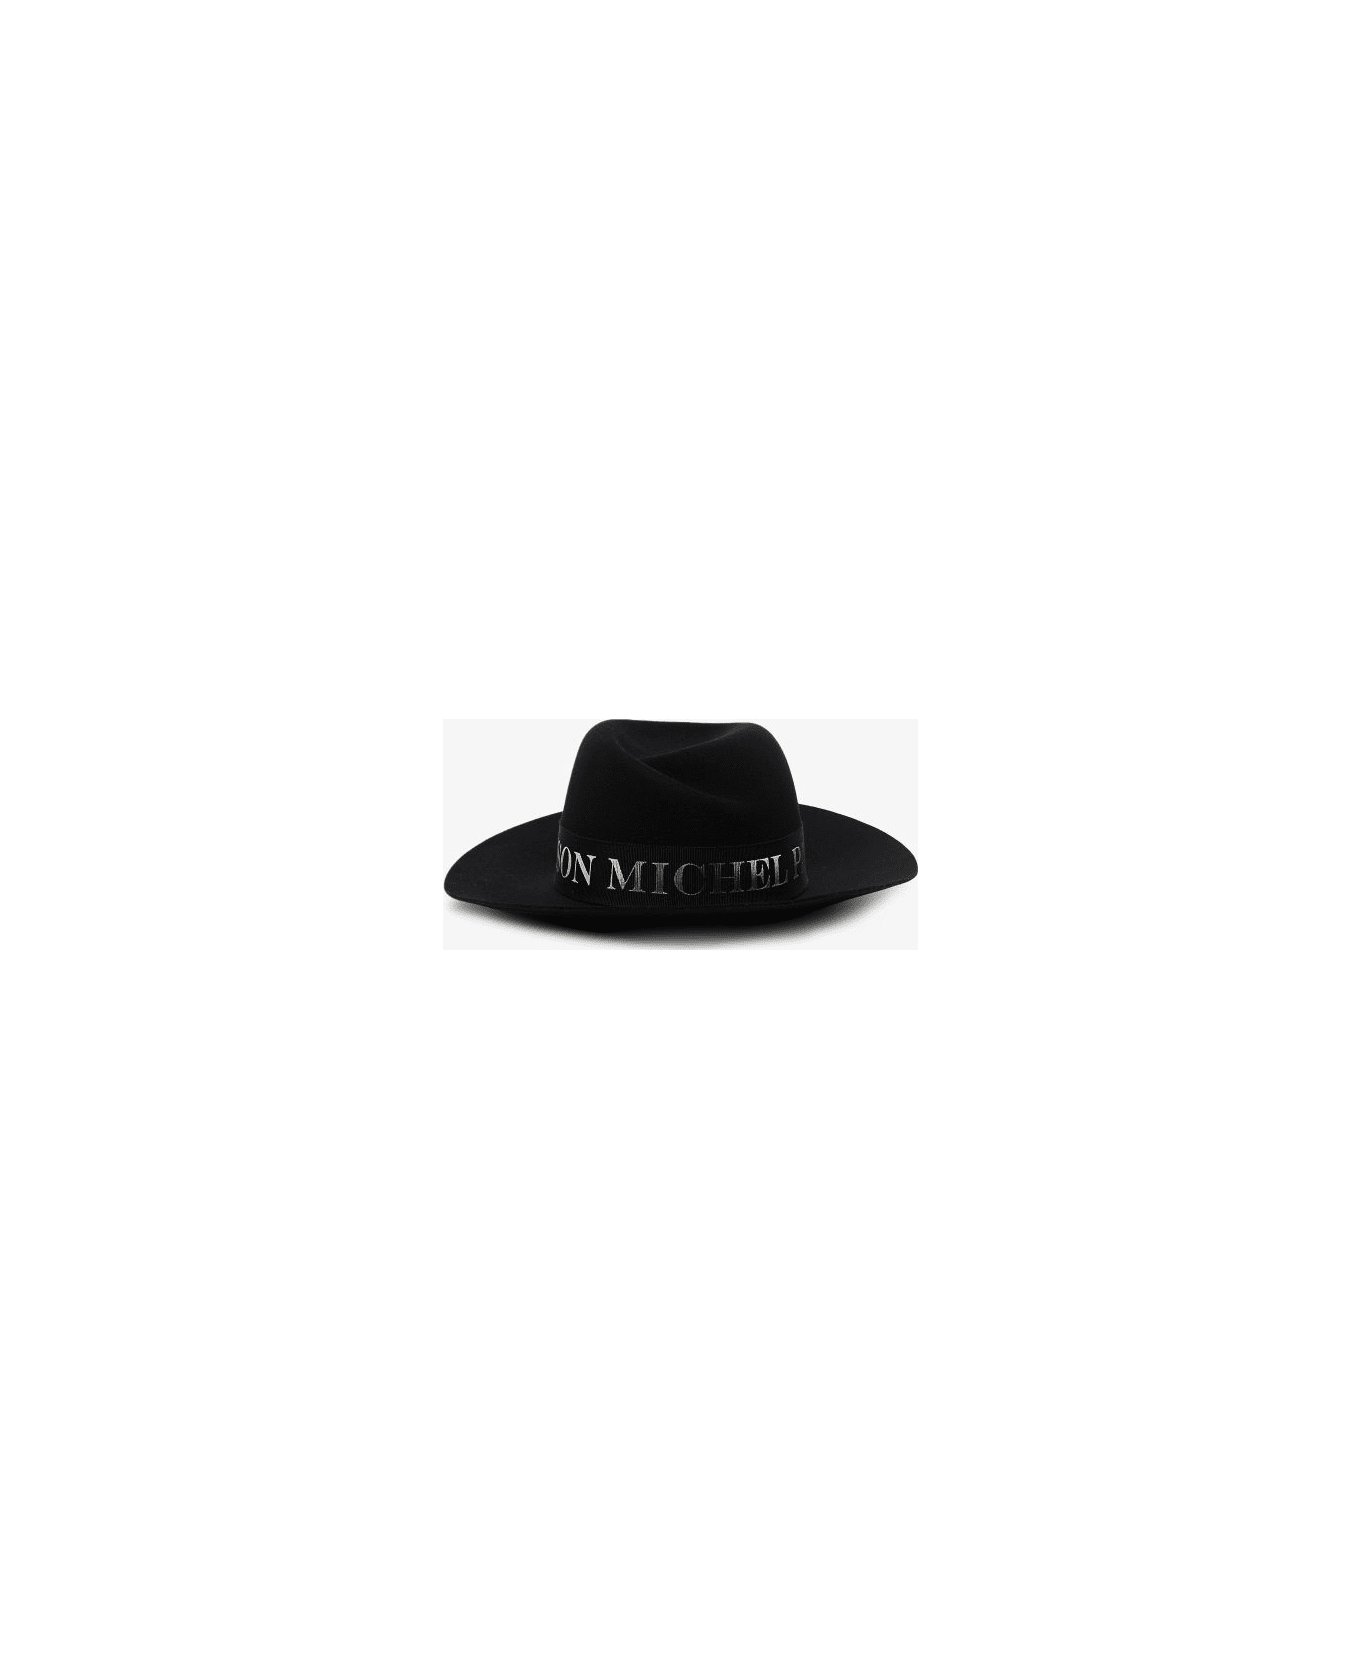 Maison Michel Hats - Black 帽子